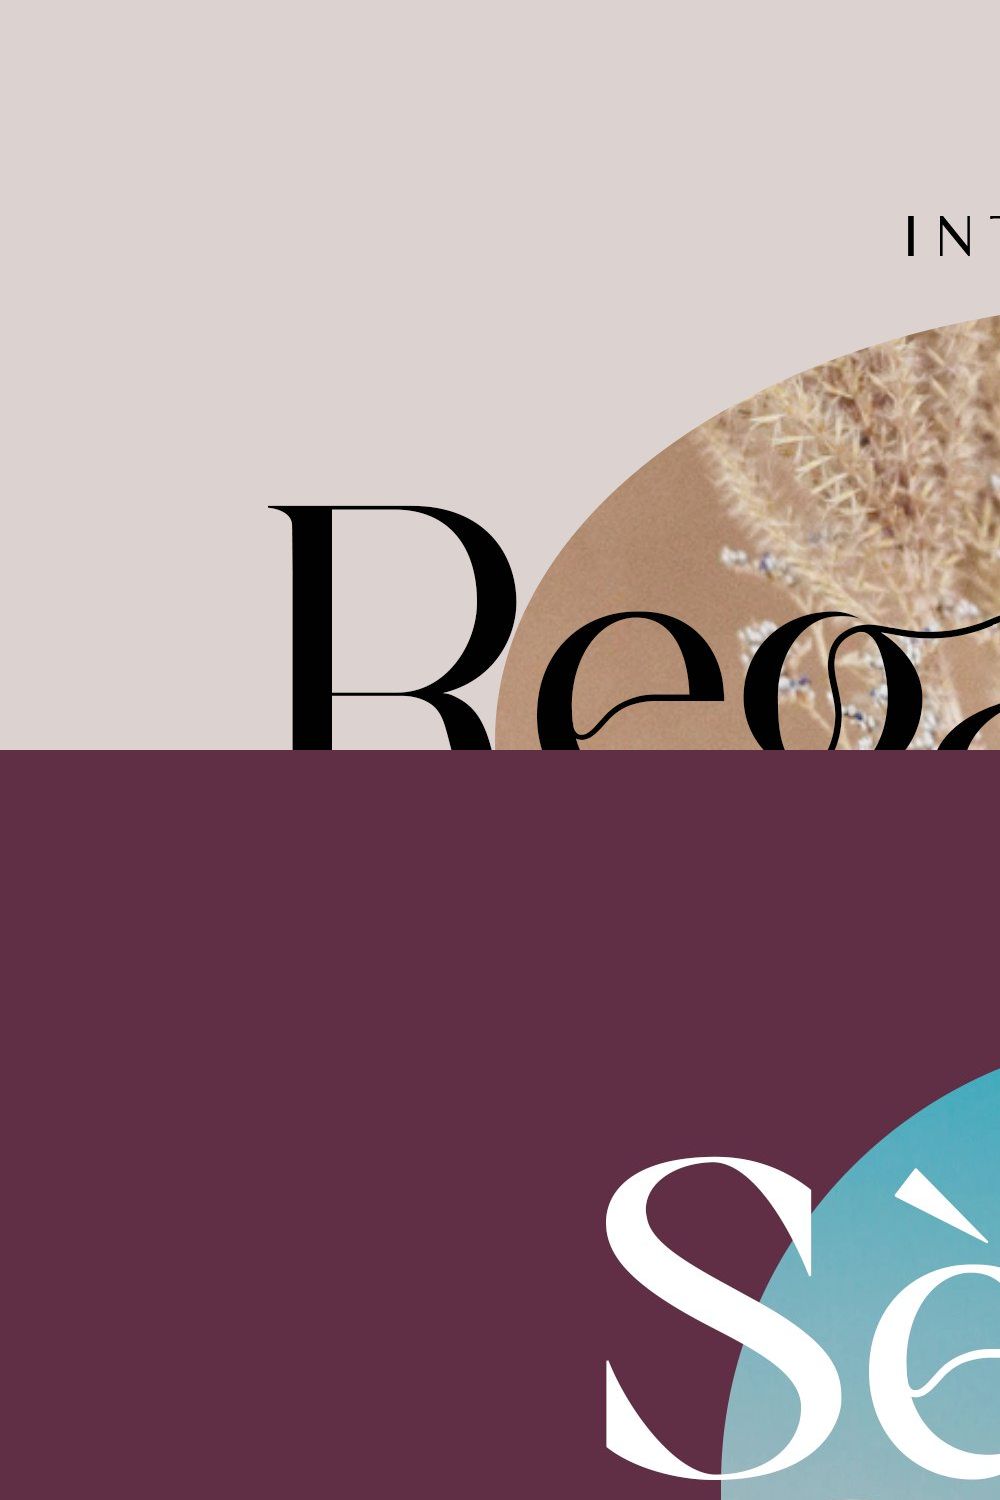 Reganesto - Modern Serif Typeface pinterest preview image.